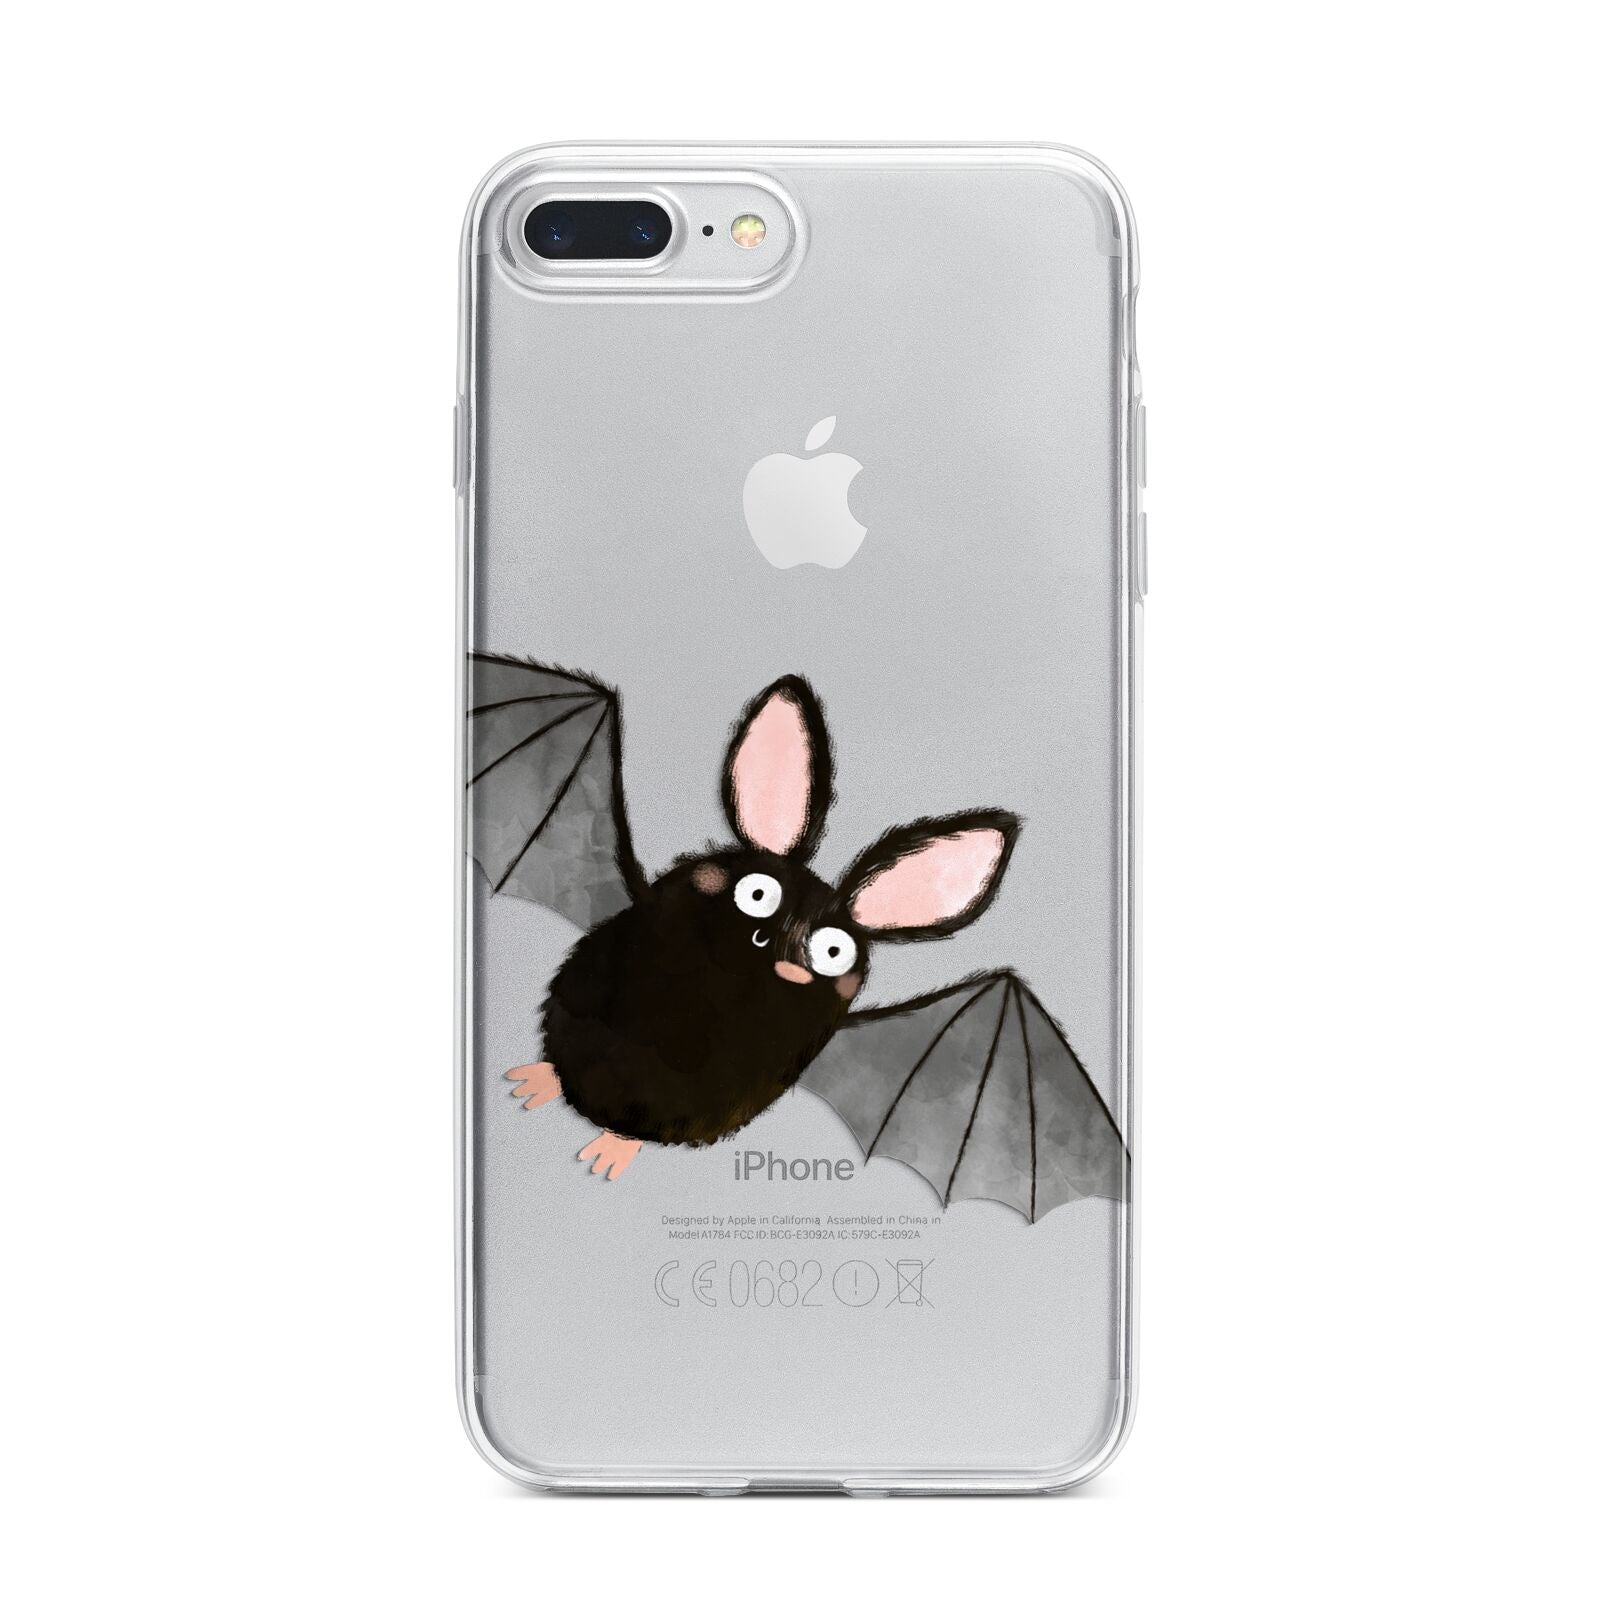 Bat Illustration iPhone 7 Plus Bumper Case on Silver iPhone